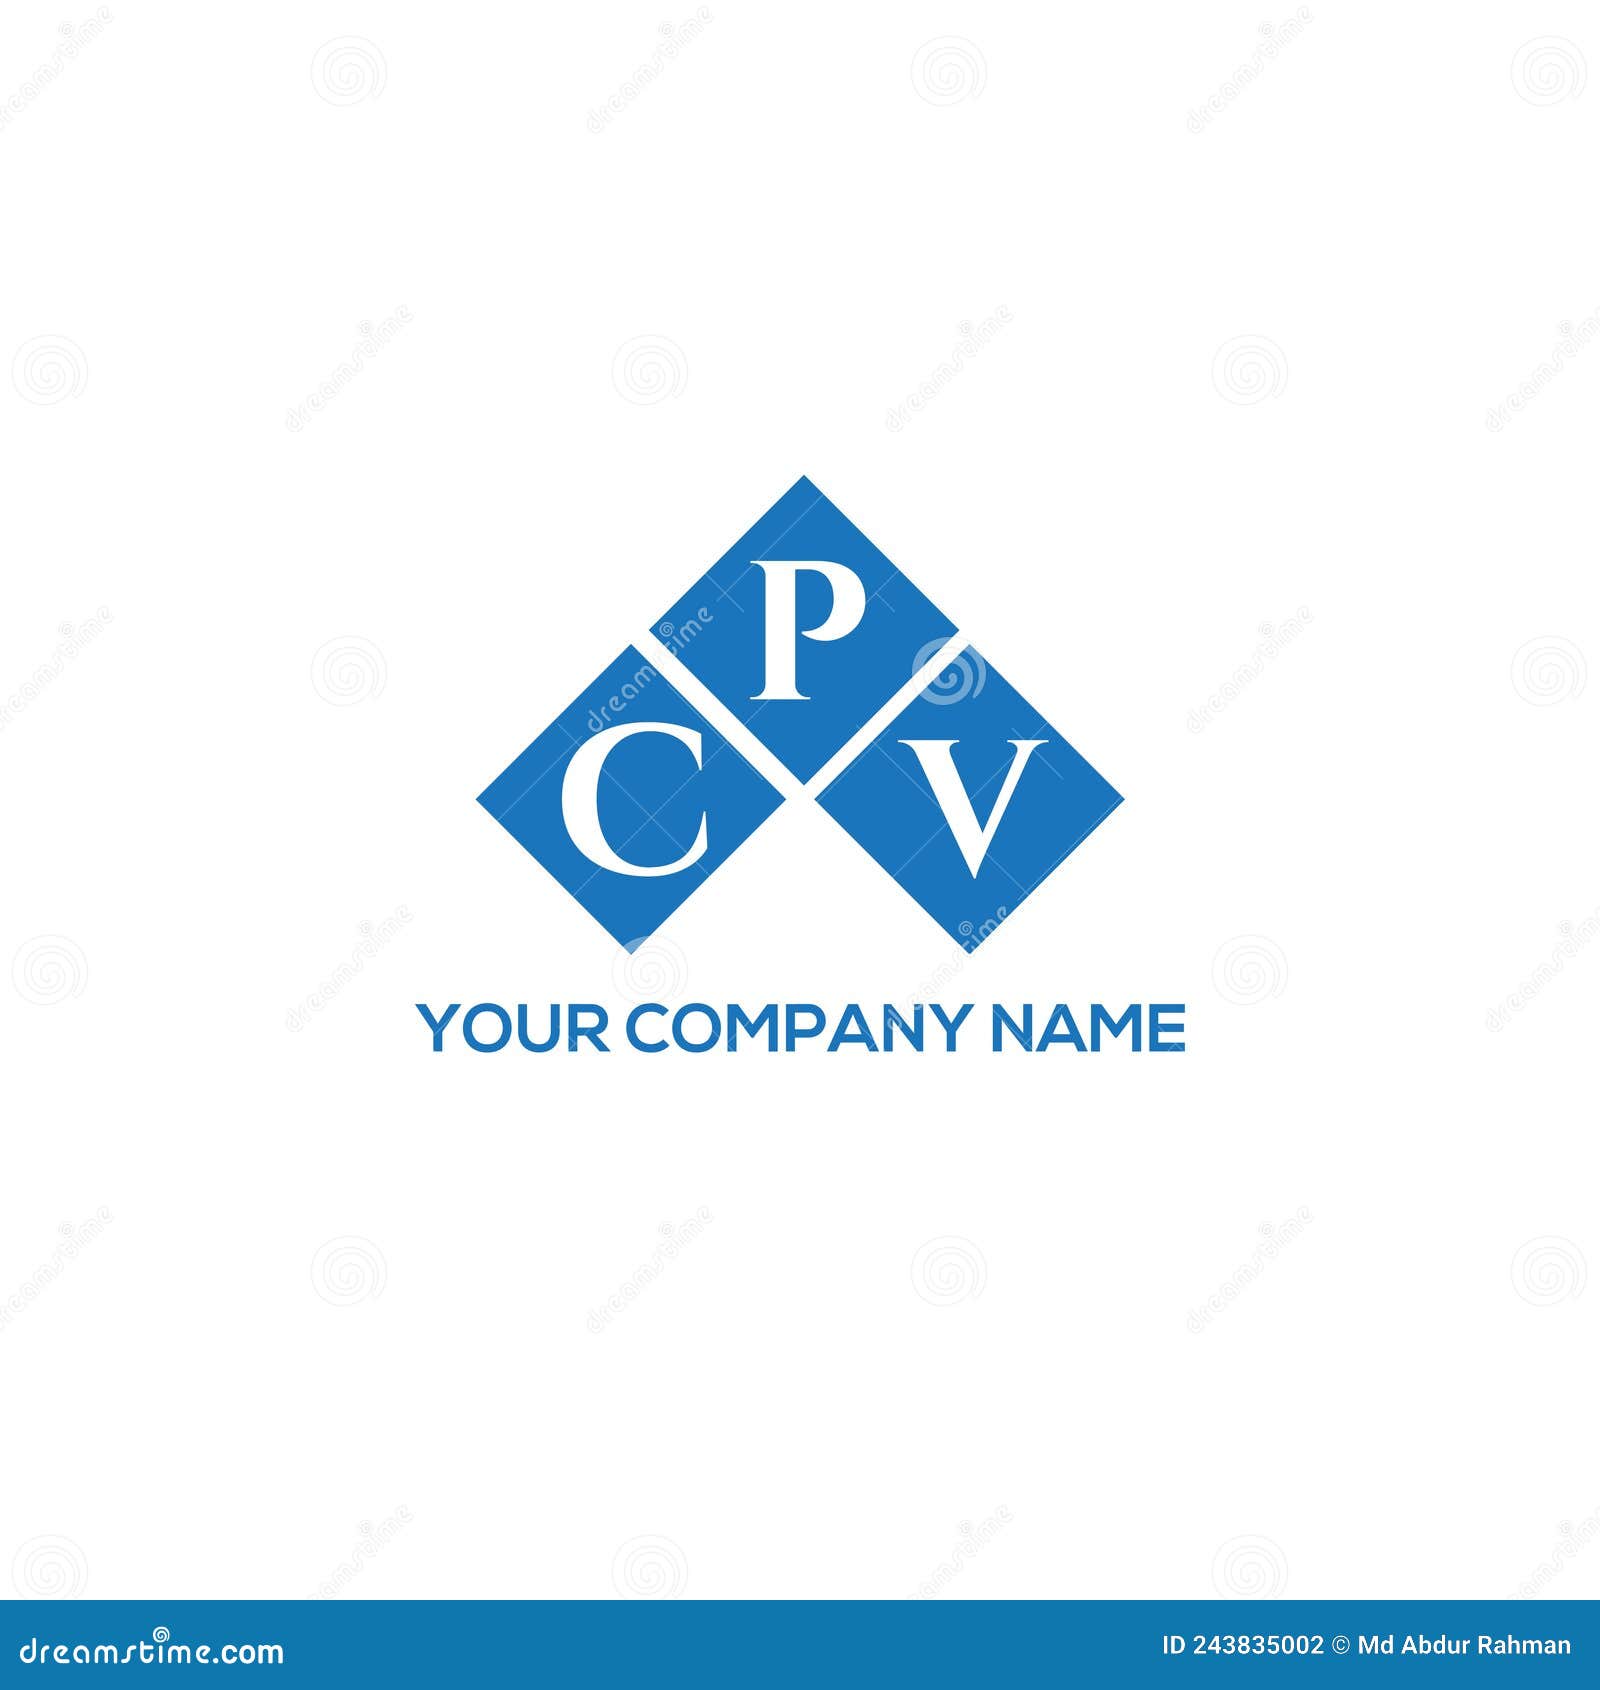 cpv letter logo  on white background. cpv creative initials letter logo concept. cpv letter 